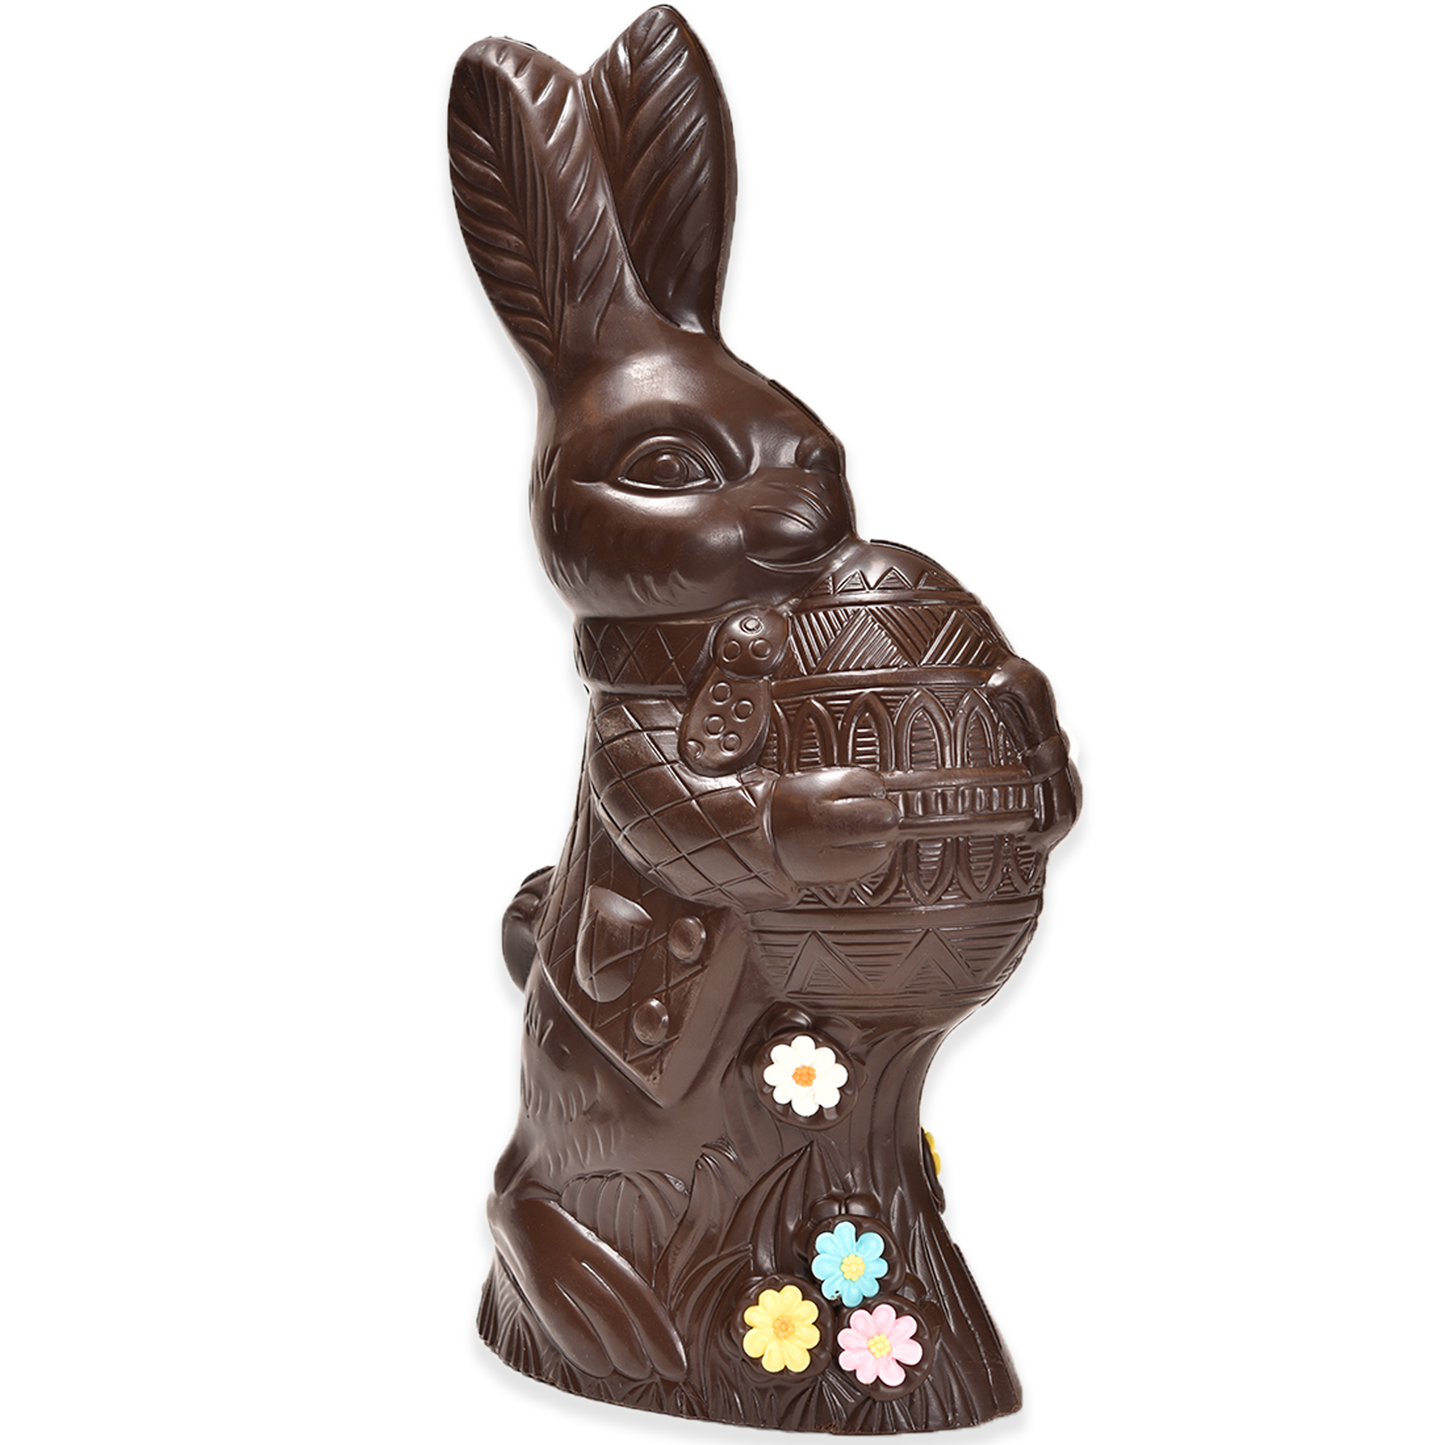 16" Dark Chocolate Easter Bunny # 101 - "Large Bunny Holding Egg"